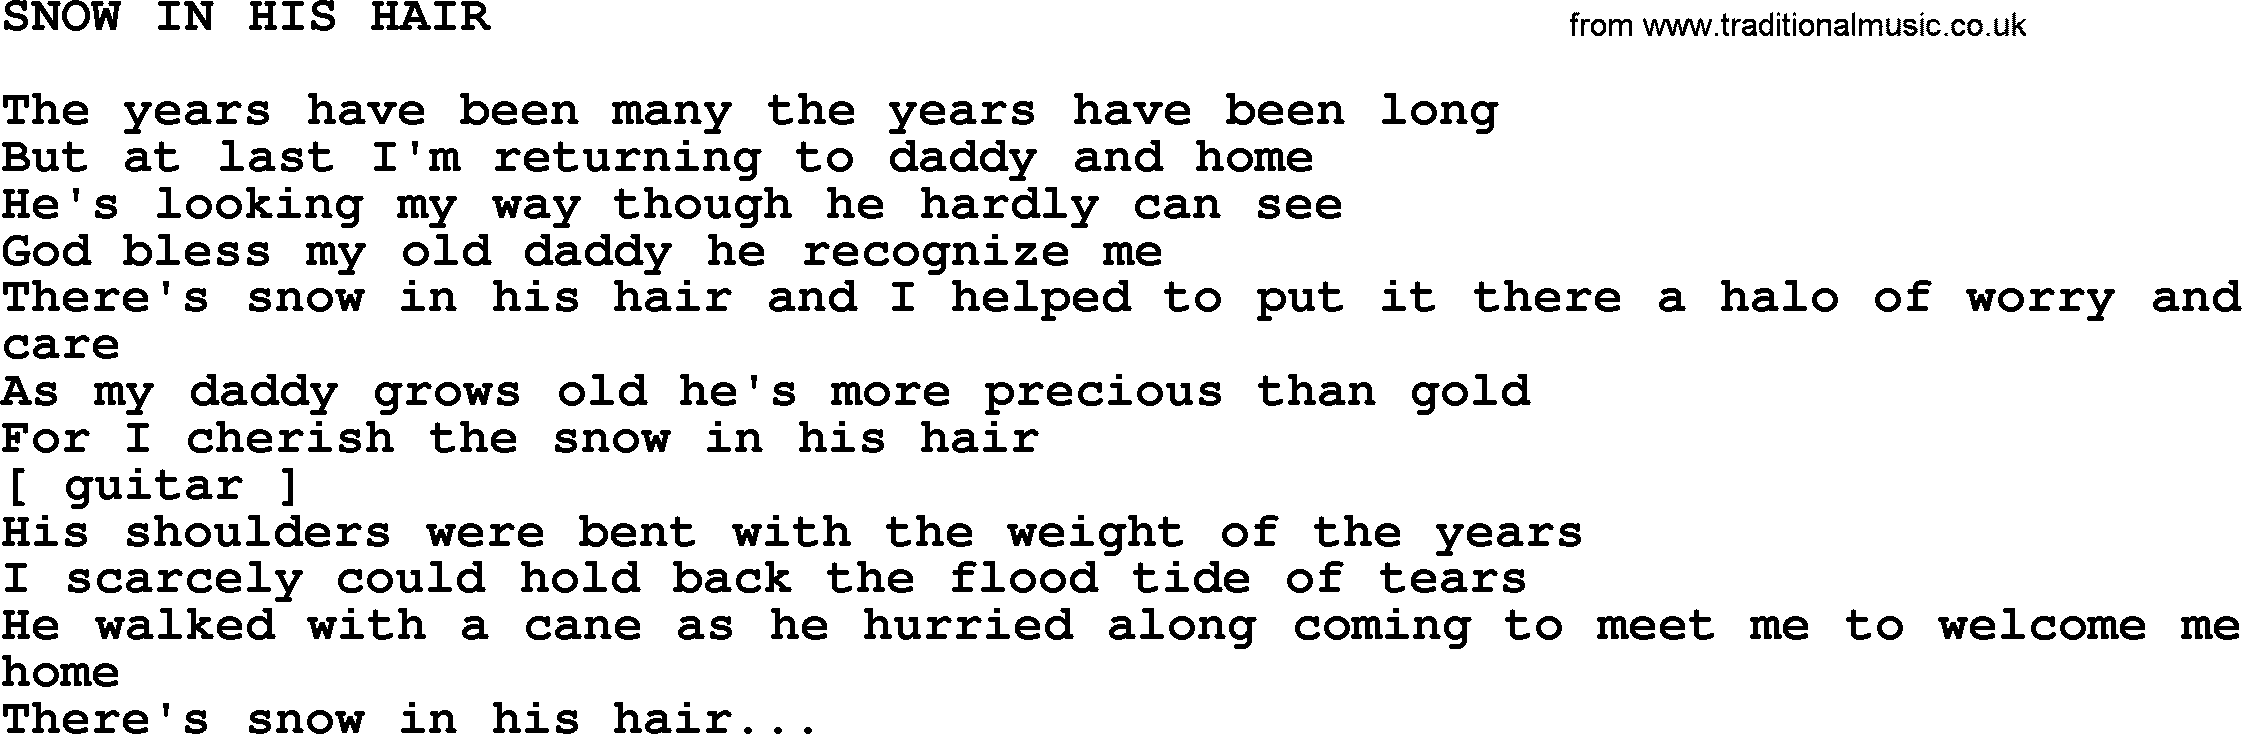 Johnny Cash song Snow In His Hair.txt lyrics